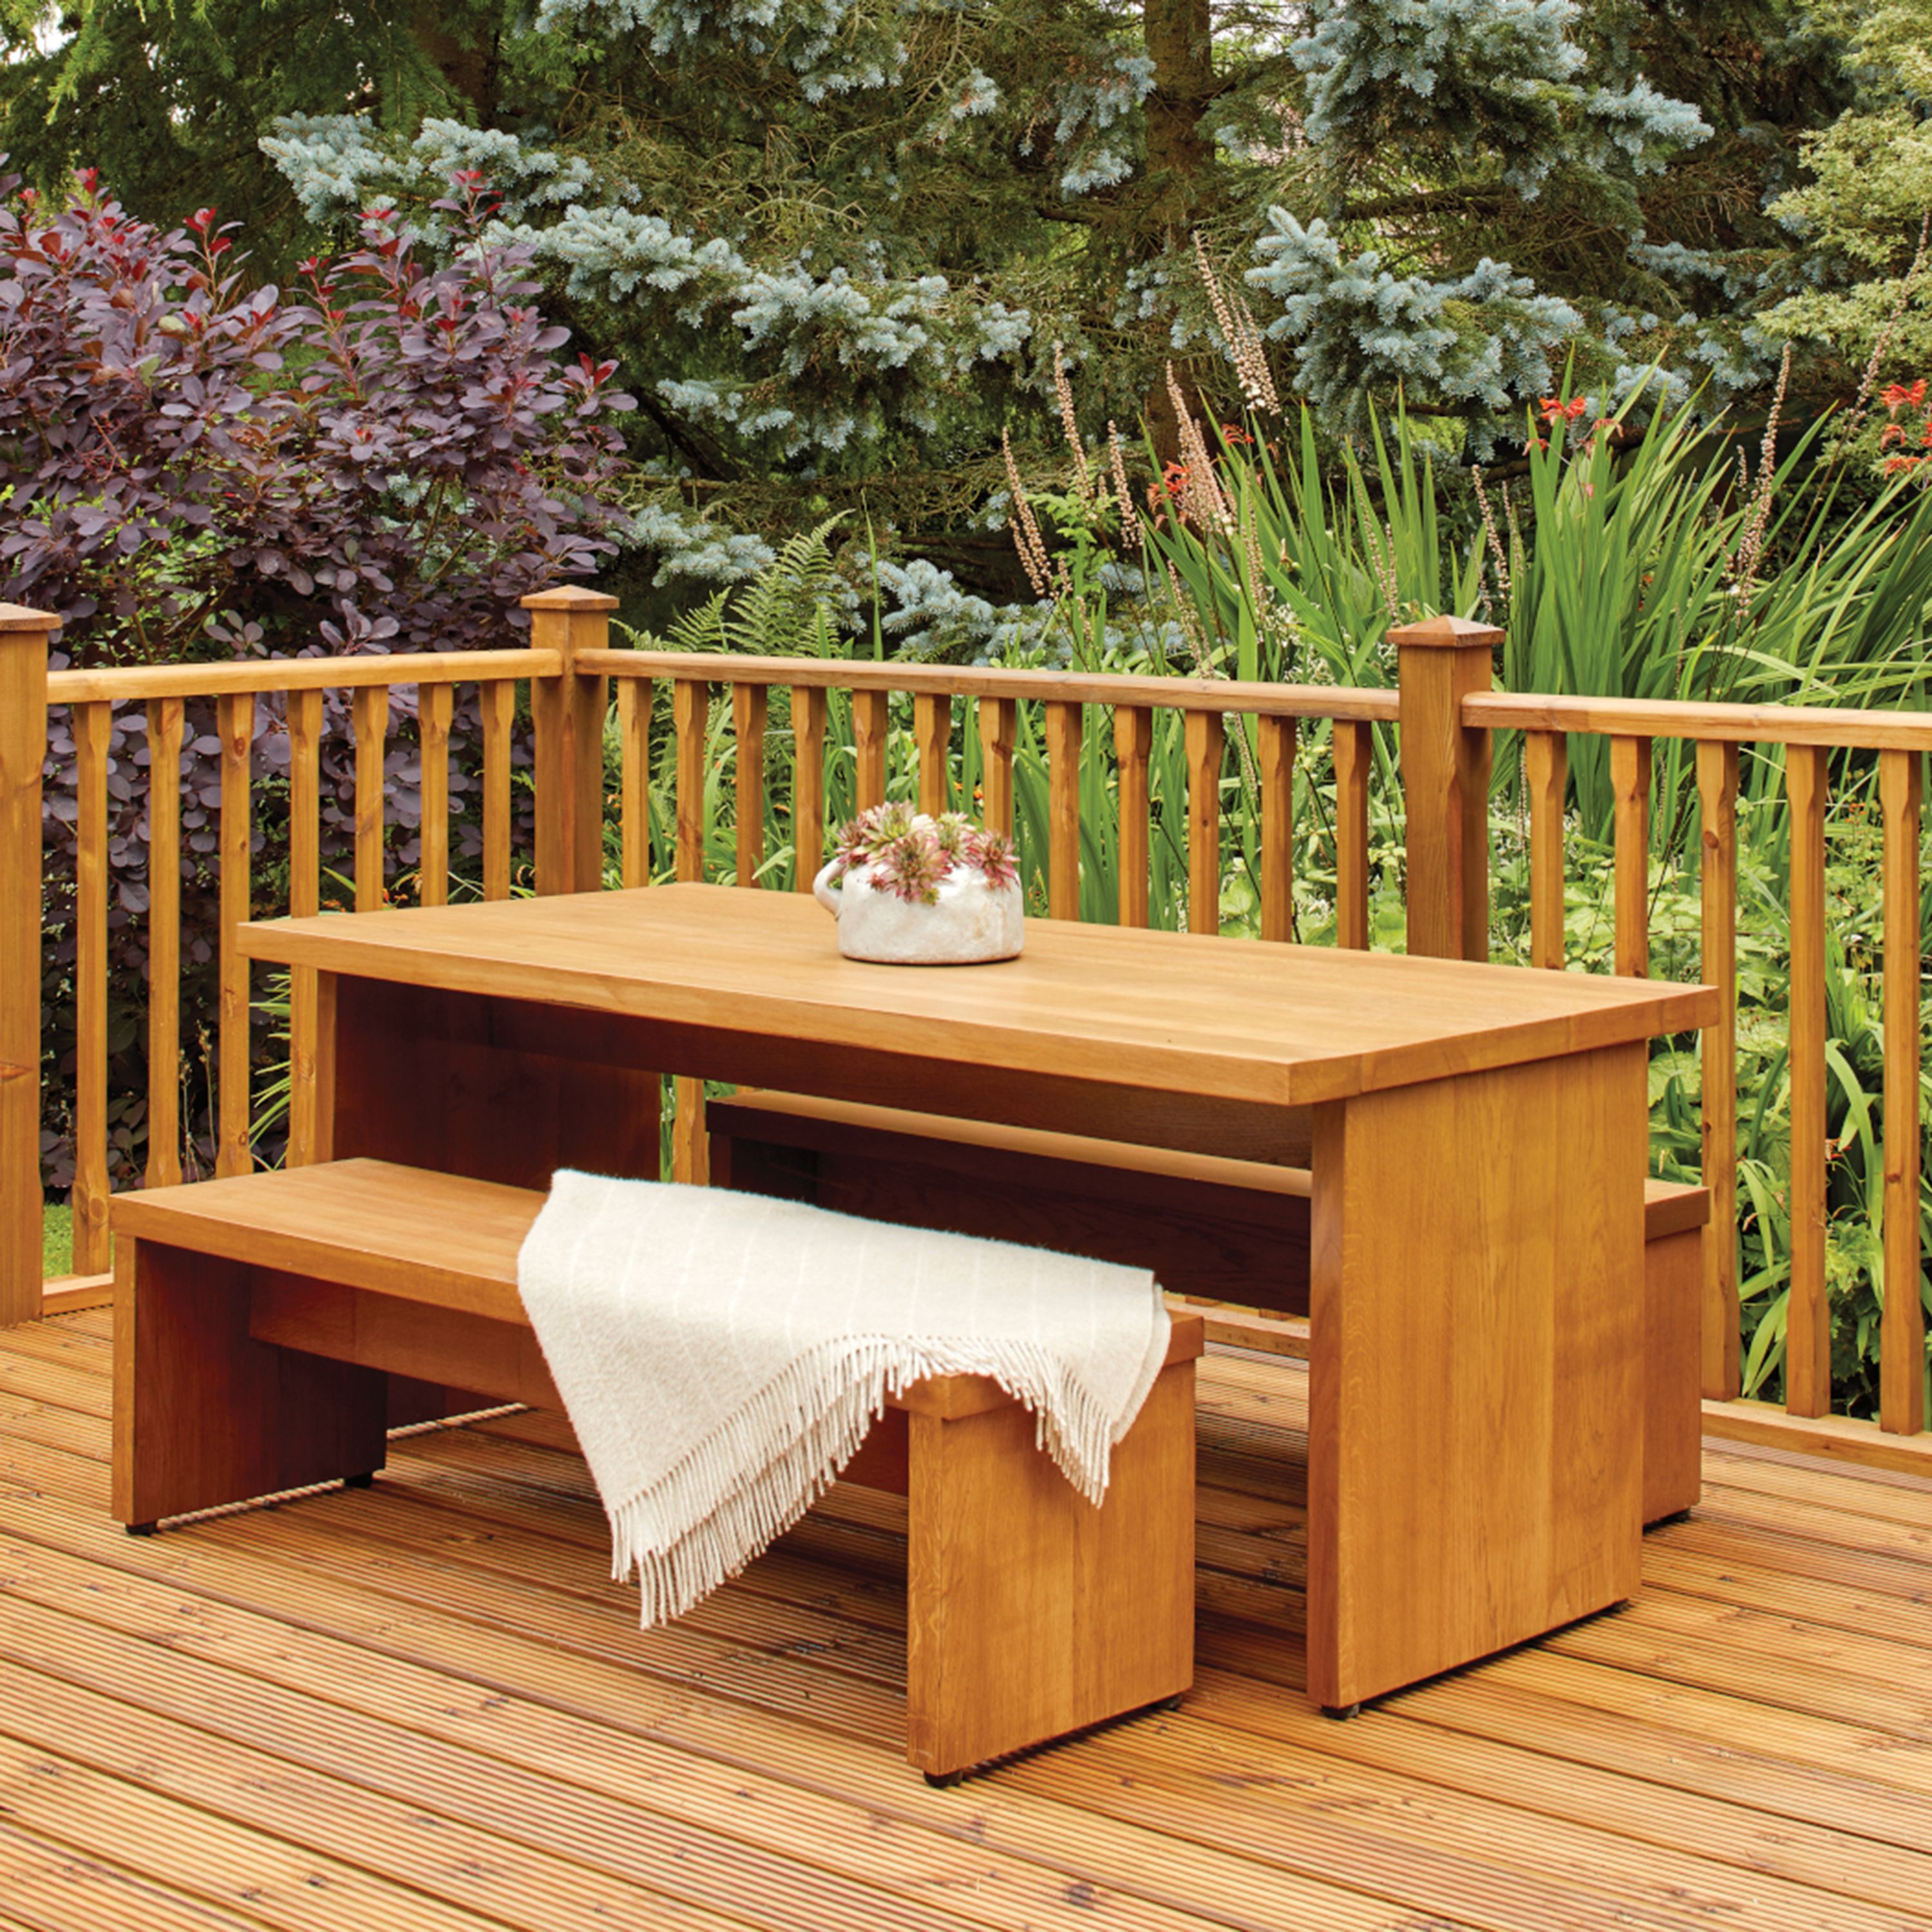 Ronseal Garden Cleaner Hardwood & softwood garden furniture Wood Cleaner, 750ml